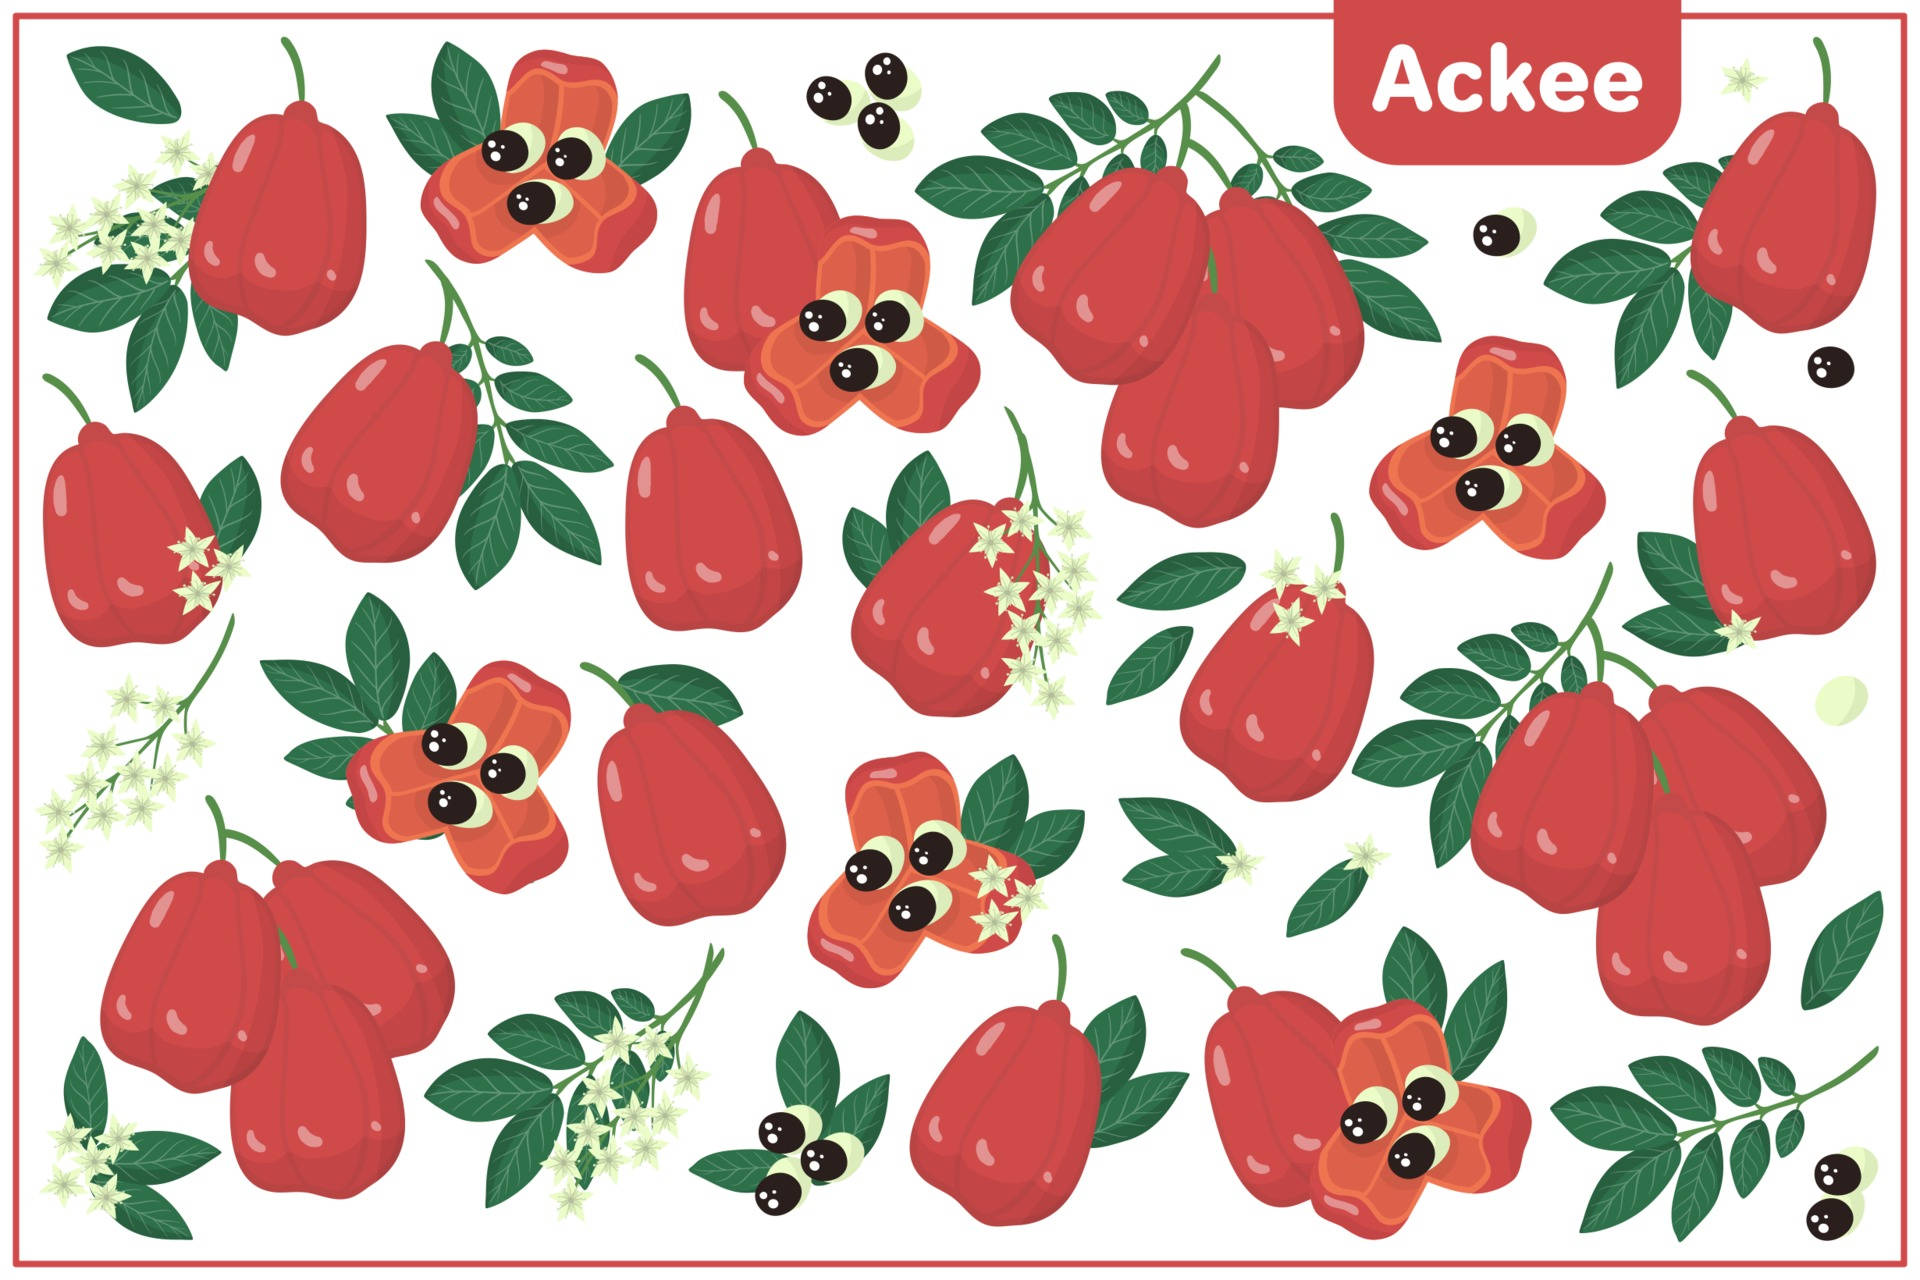 Ackee 1920 X 1280 Wallpaper